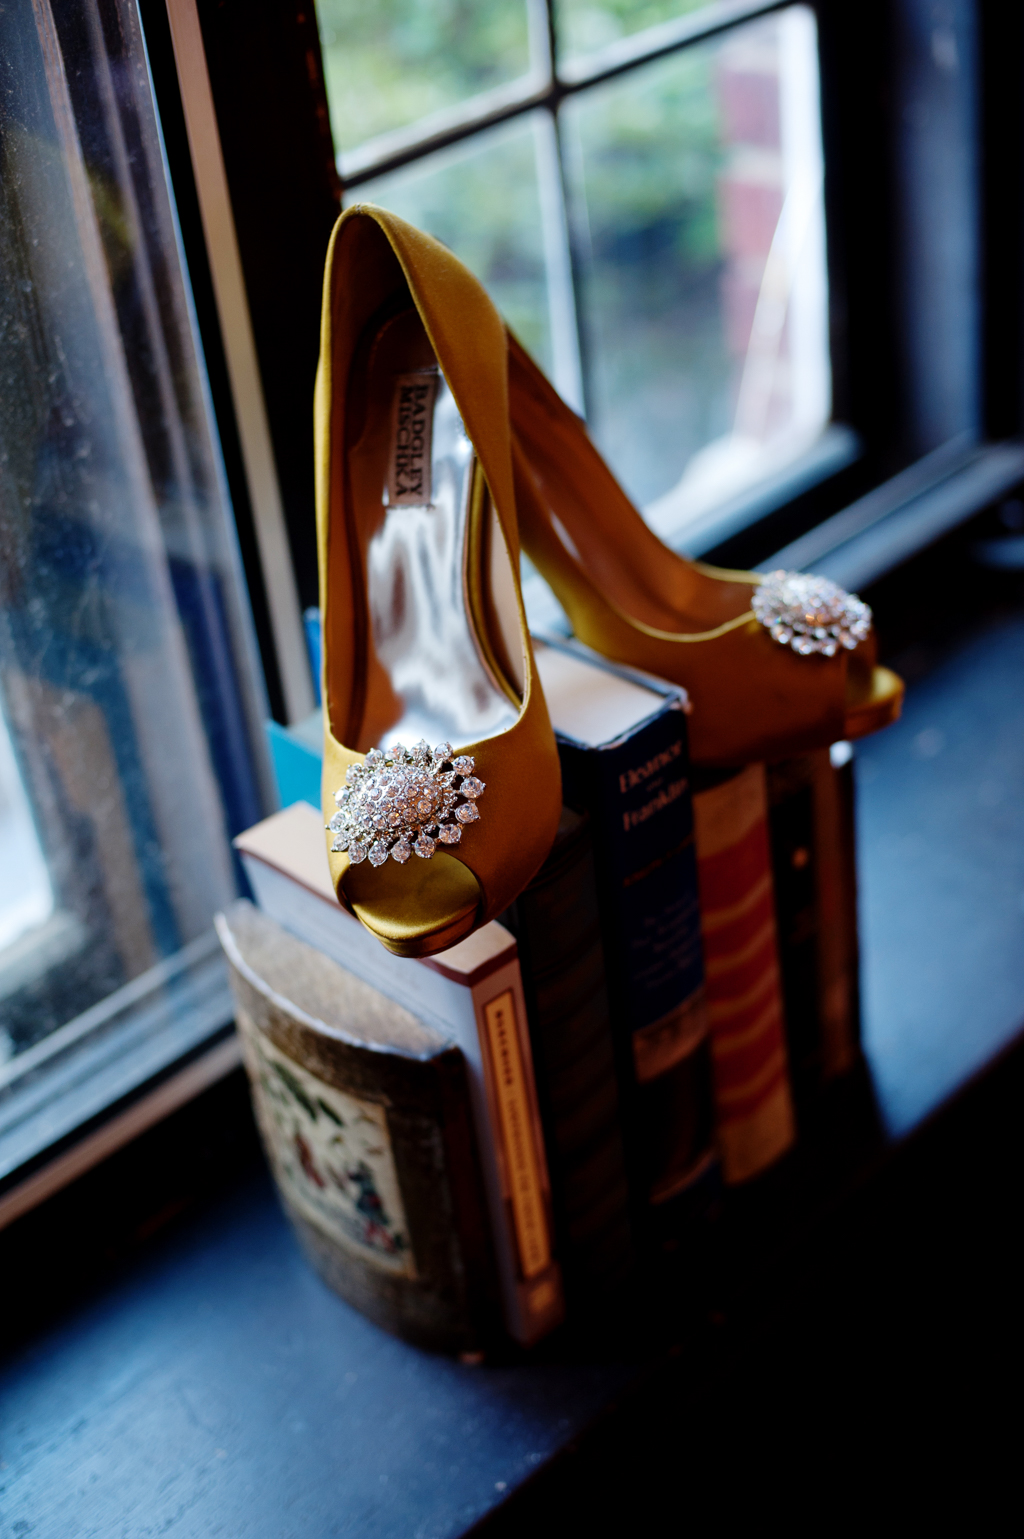 mustard gold colored badgley mischka wedding heels atop a row of books